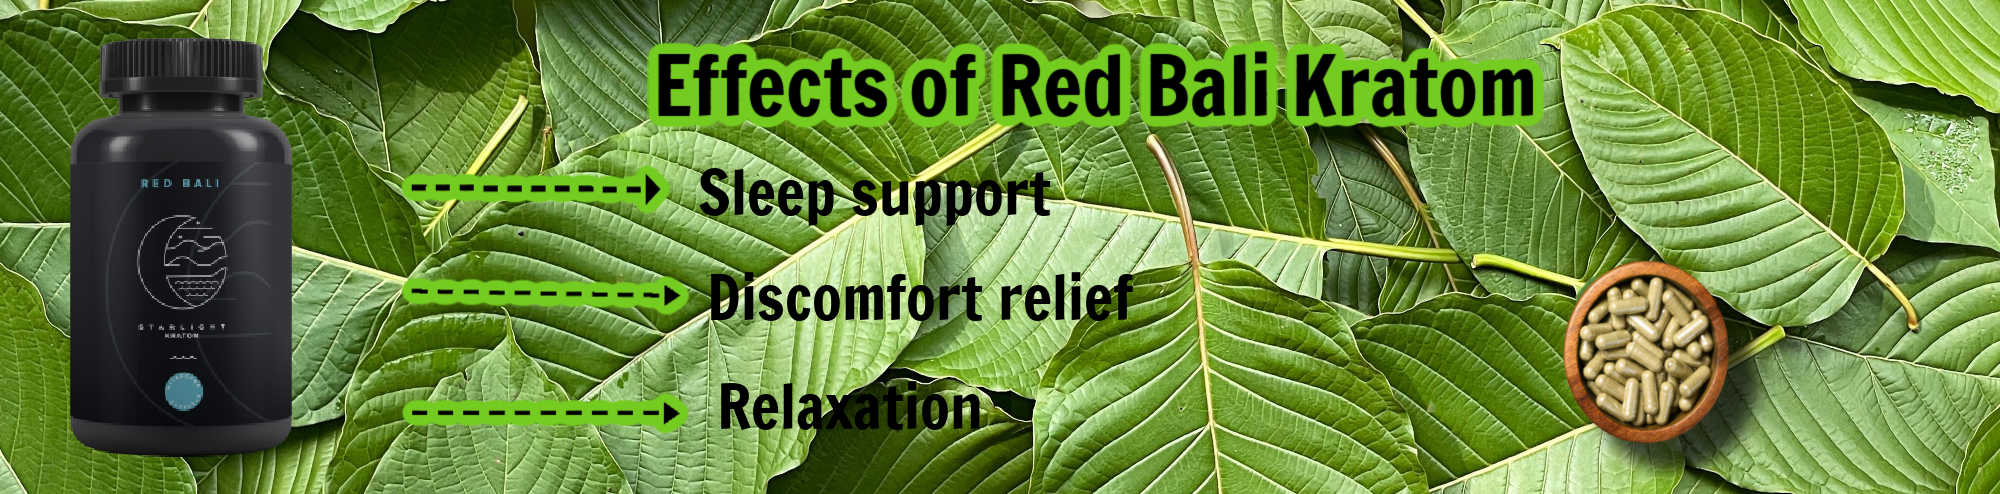 image of red bali kratom effects